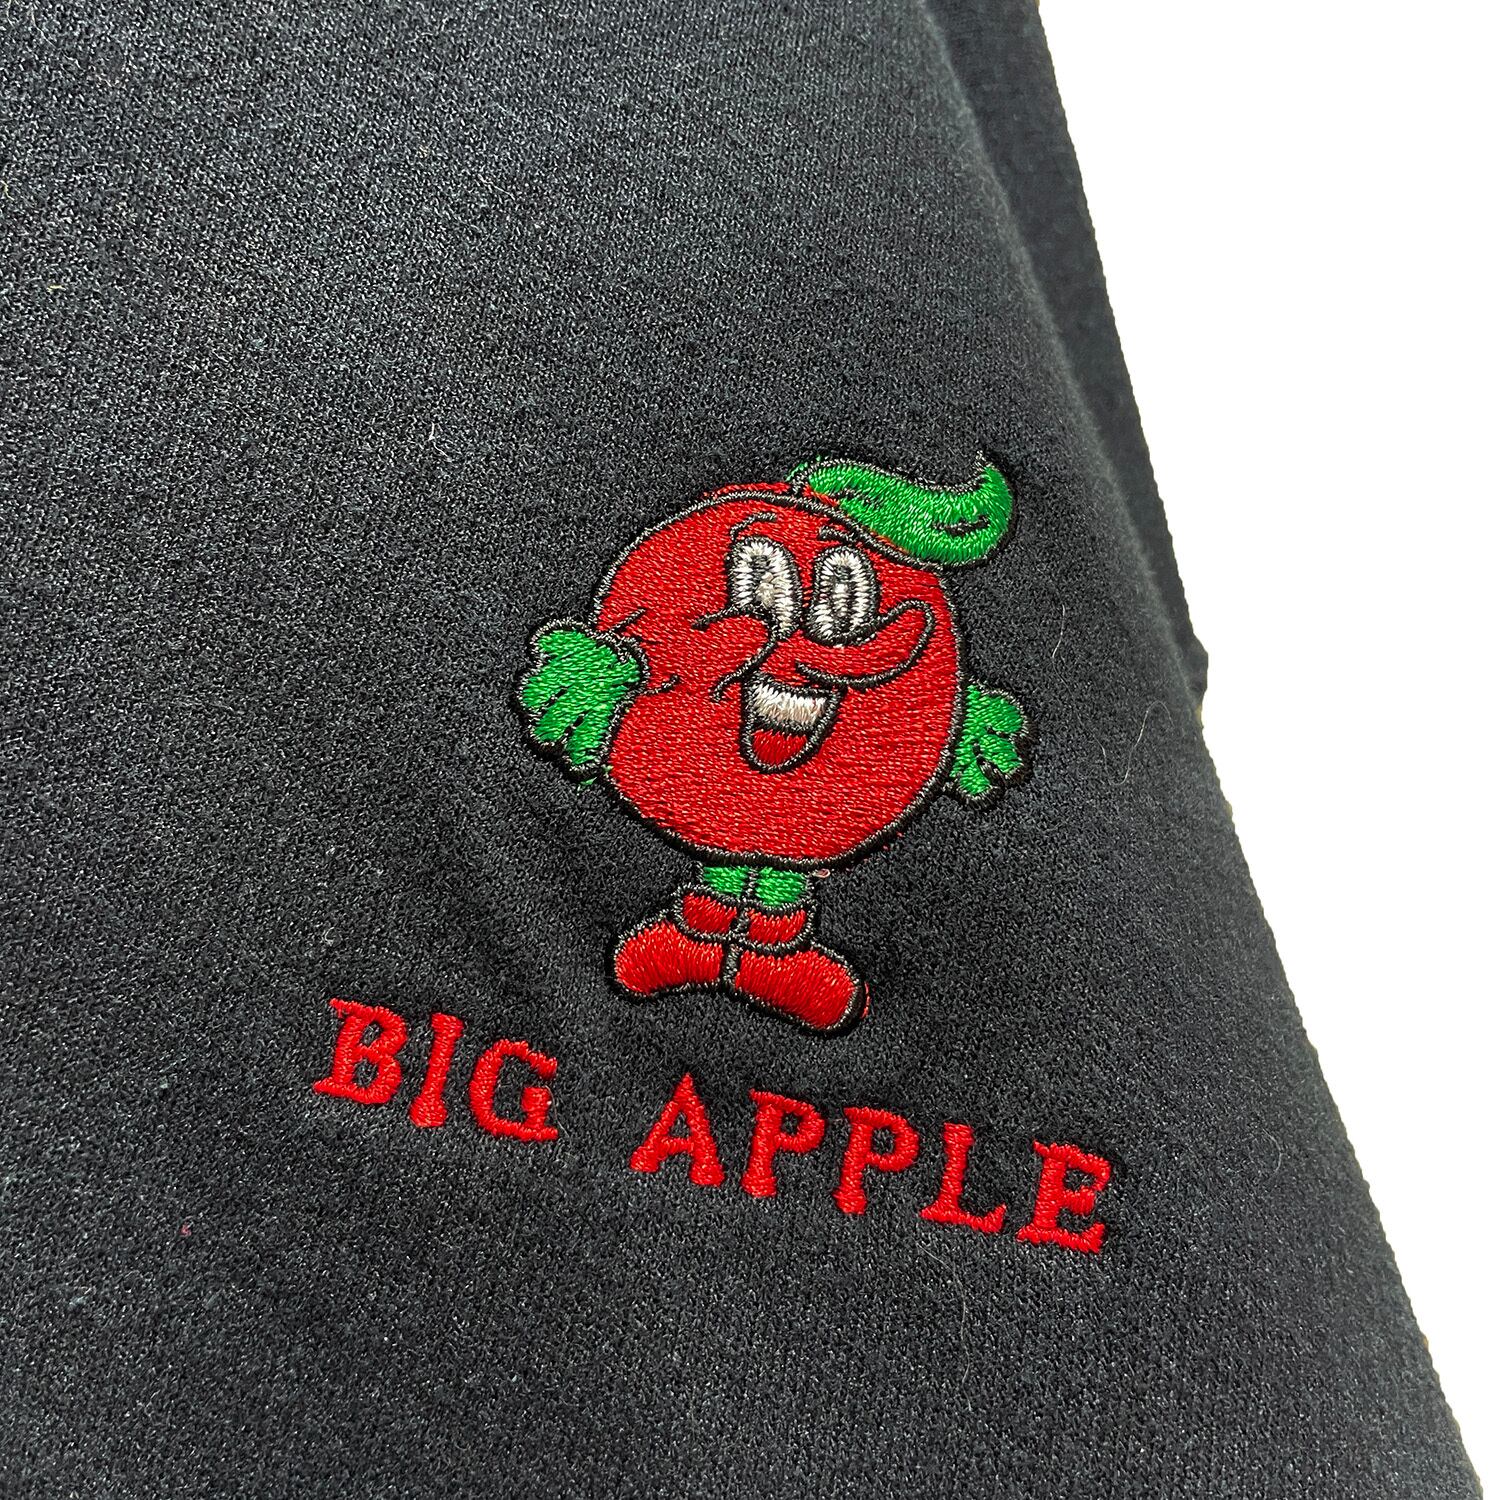 USA古着 スウェット パーカー 刺繍 ロゴ リンゴ ビッグアップル ...